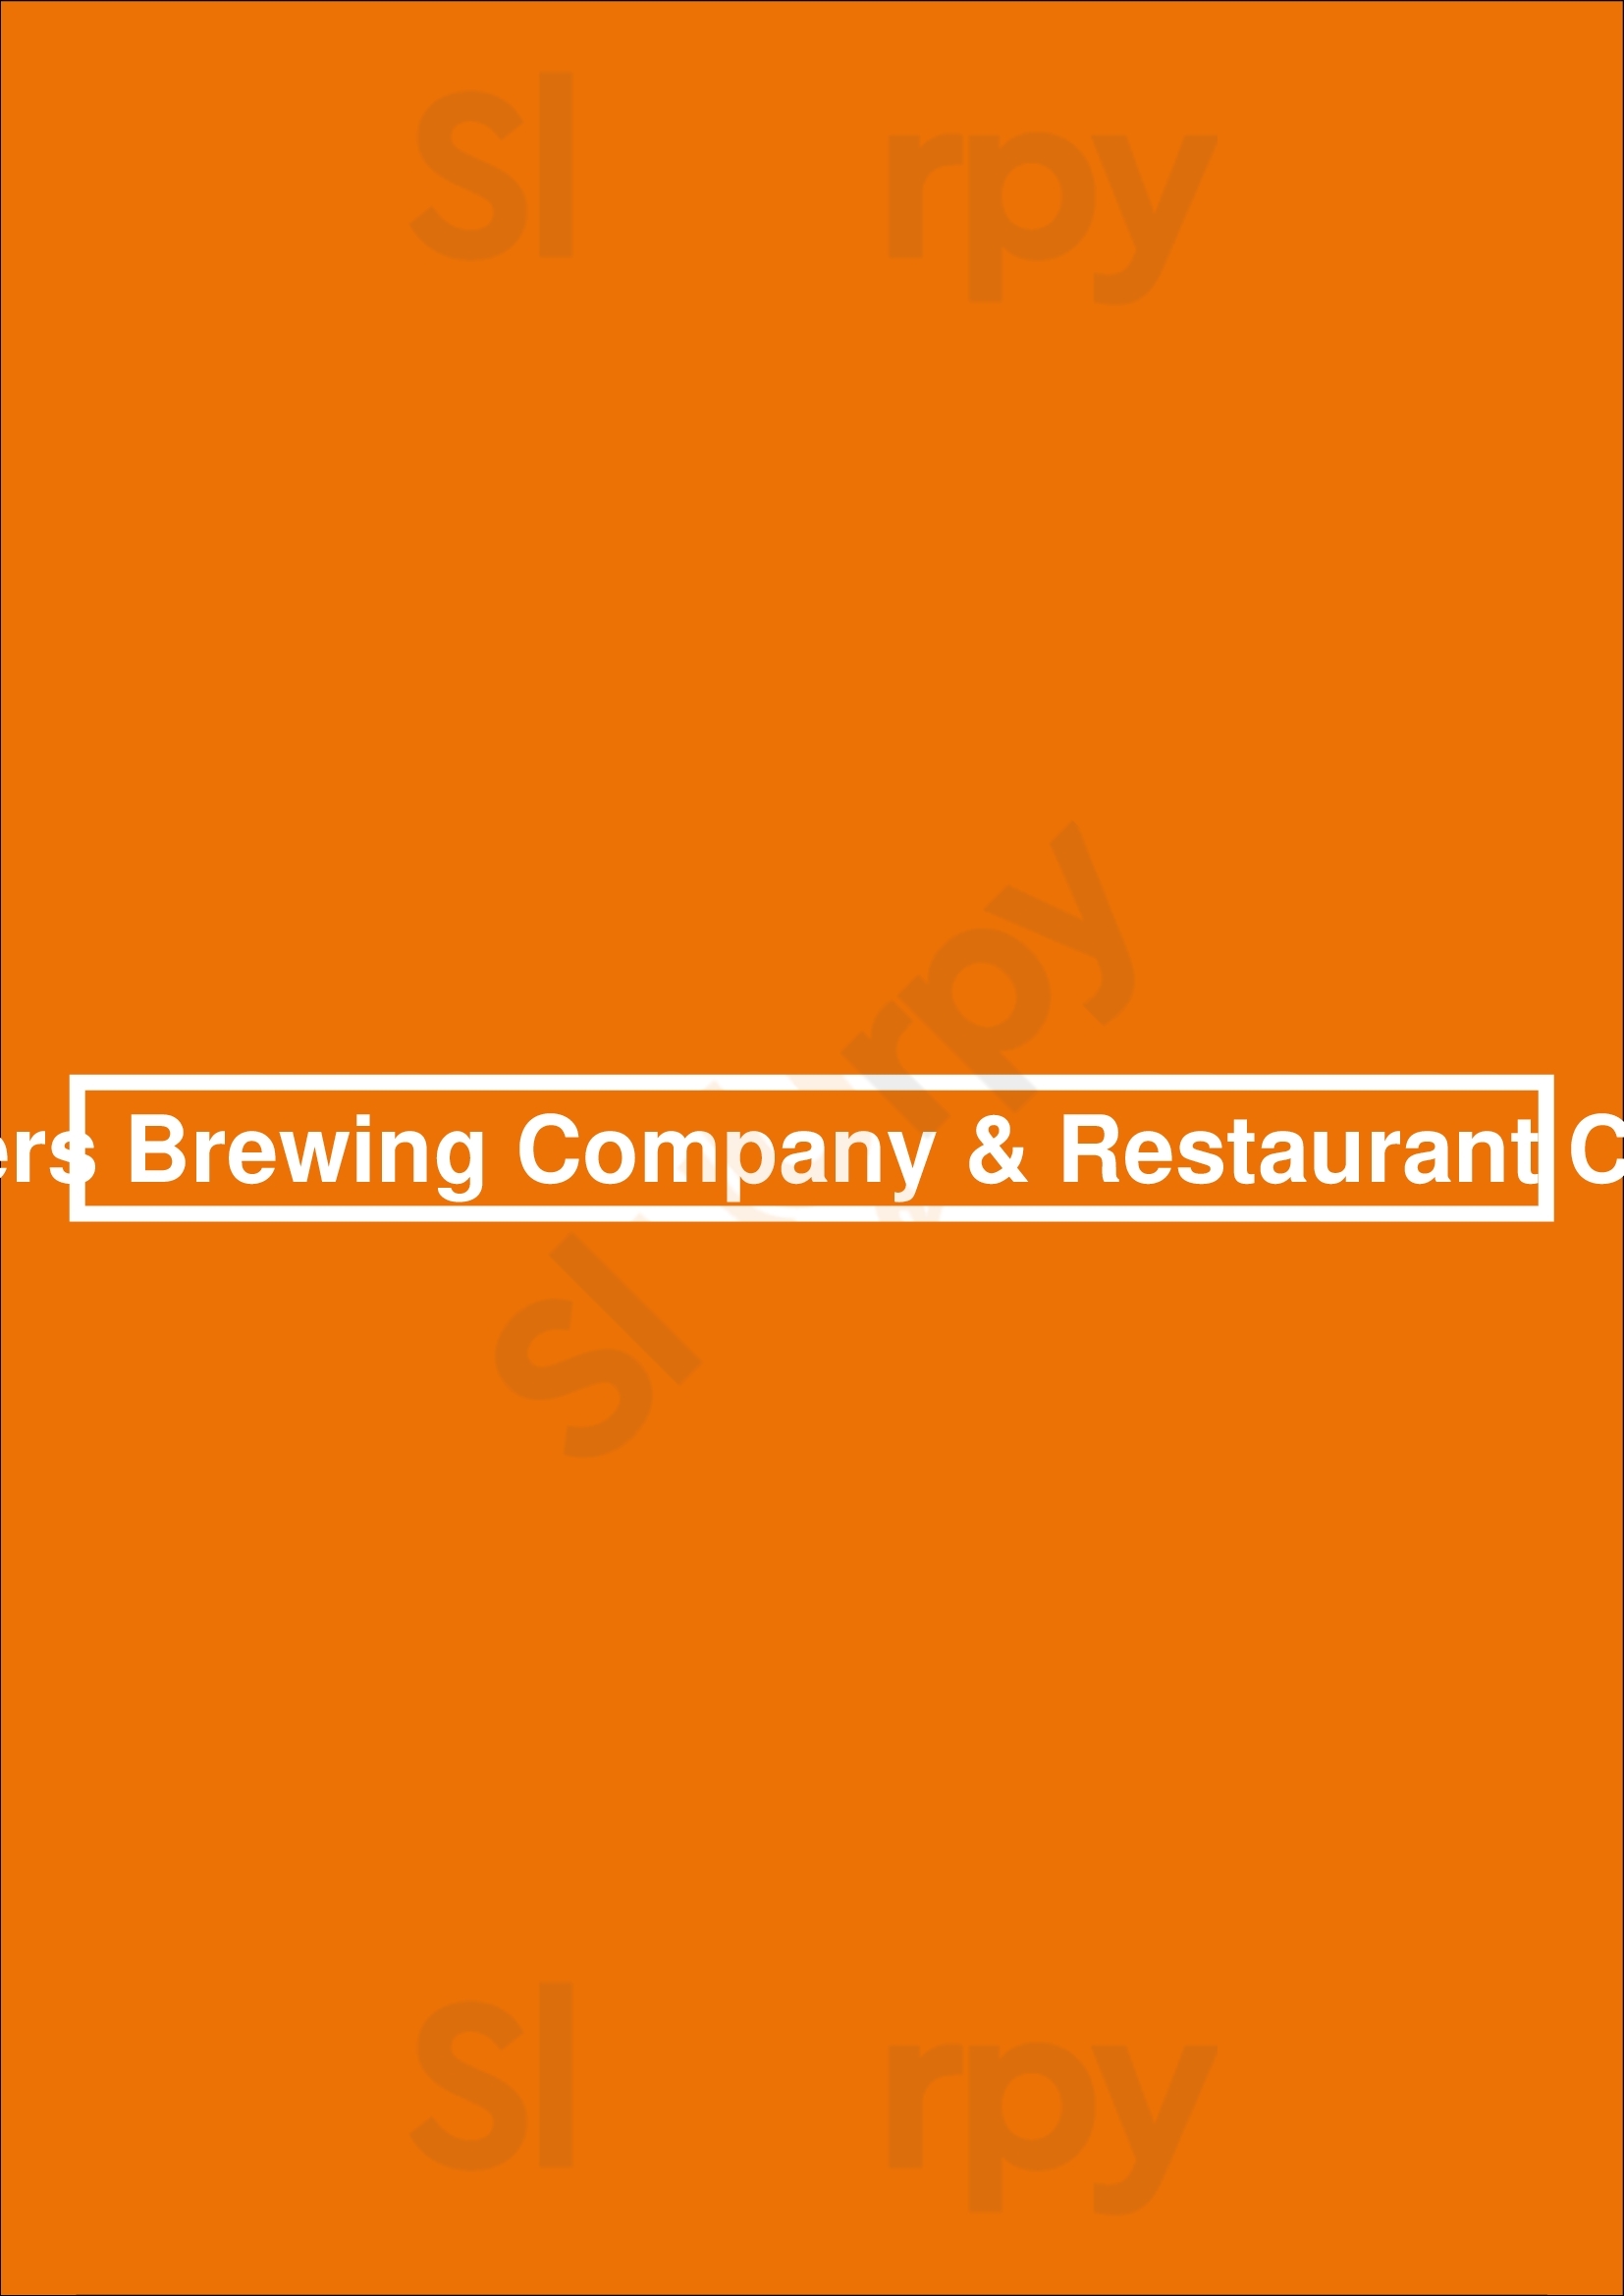 Brewsters Brewing Company & Restaurant Crowfoot Calgary Menu - 1